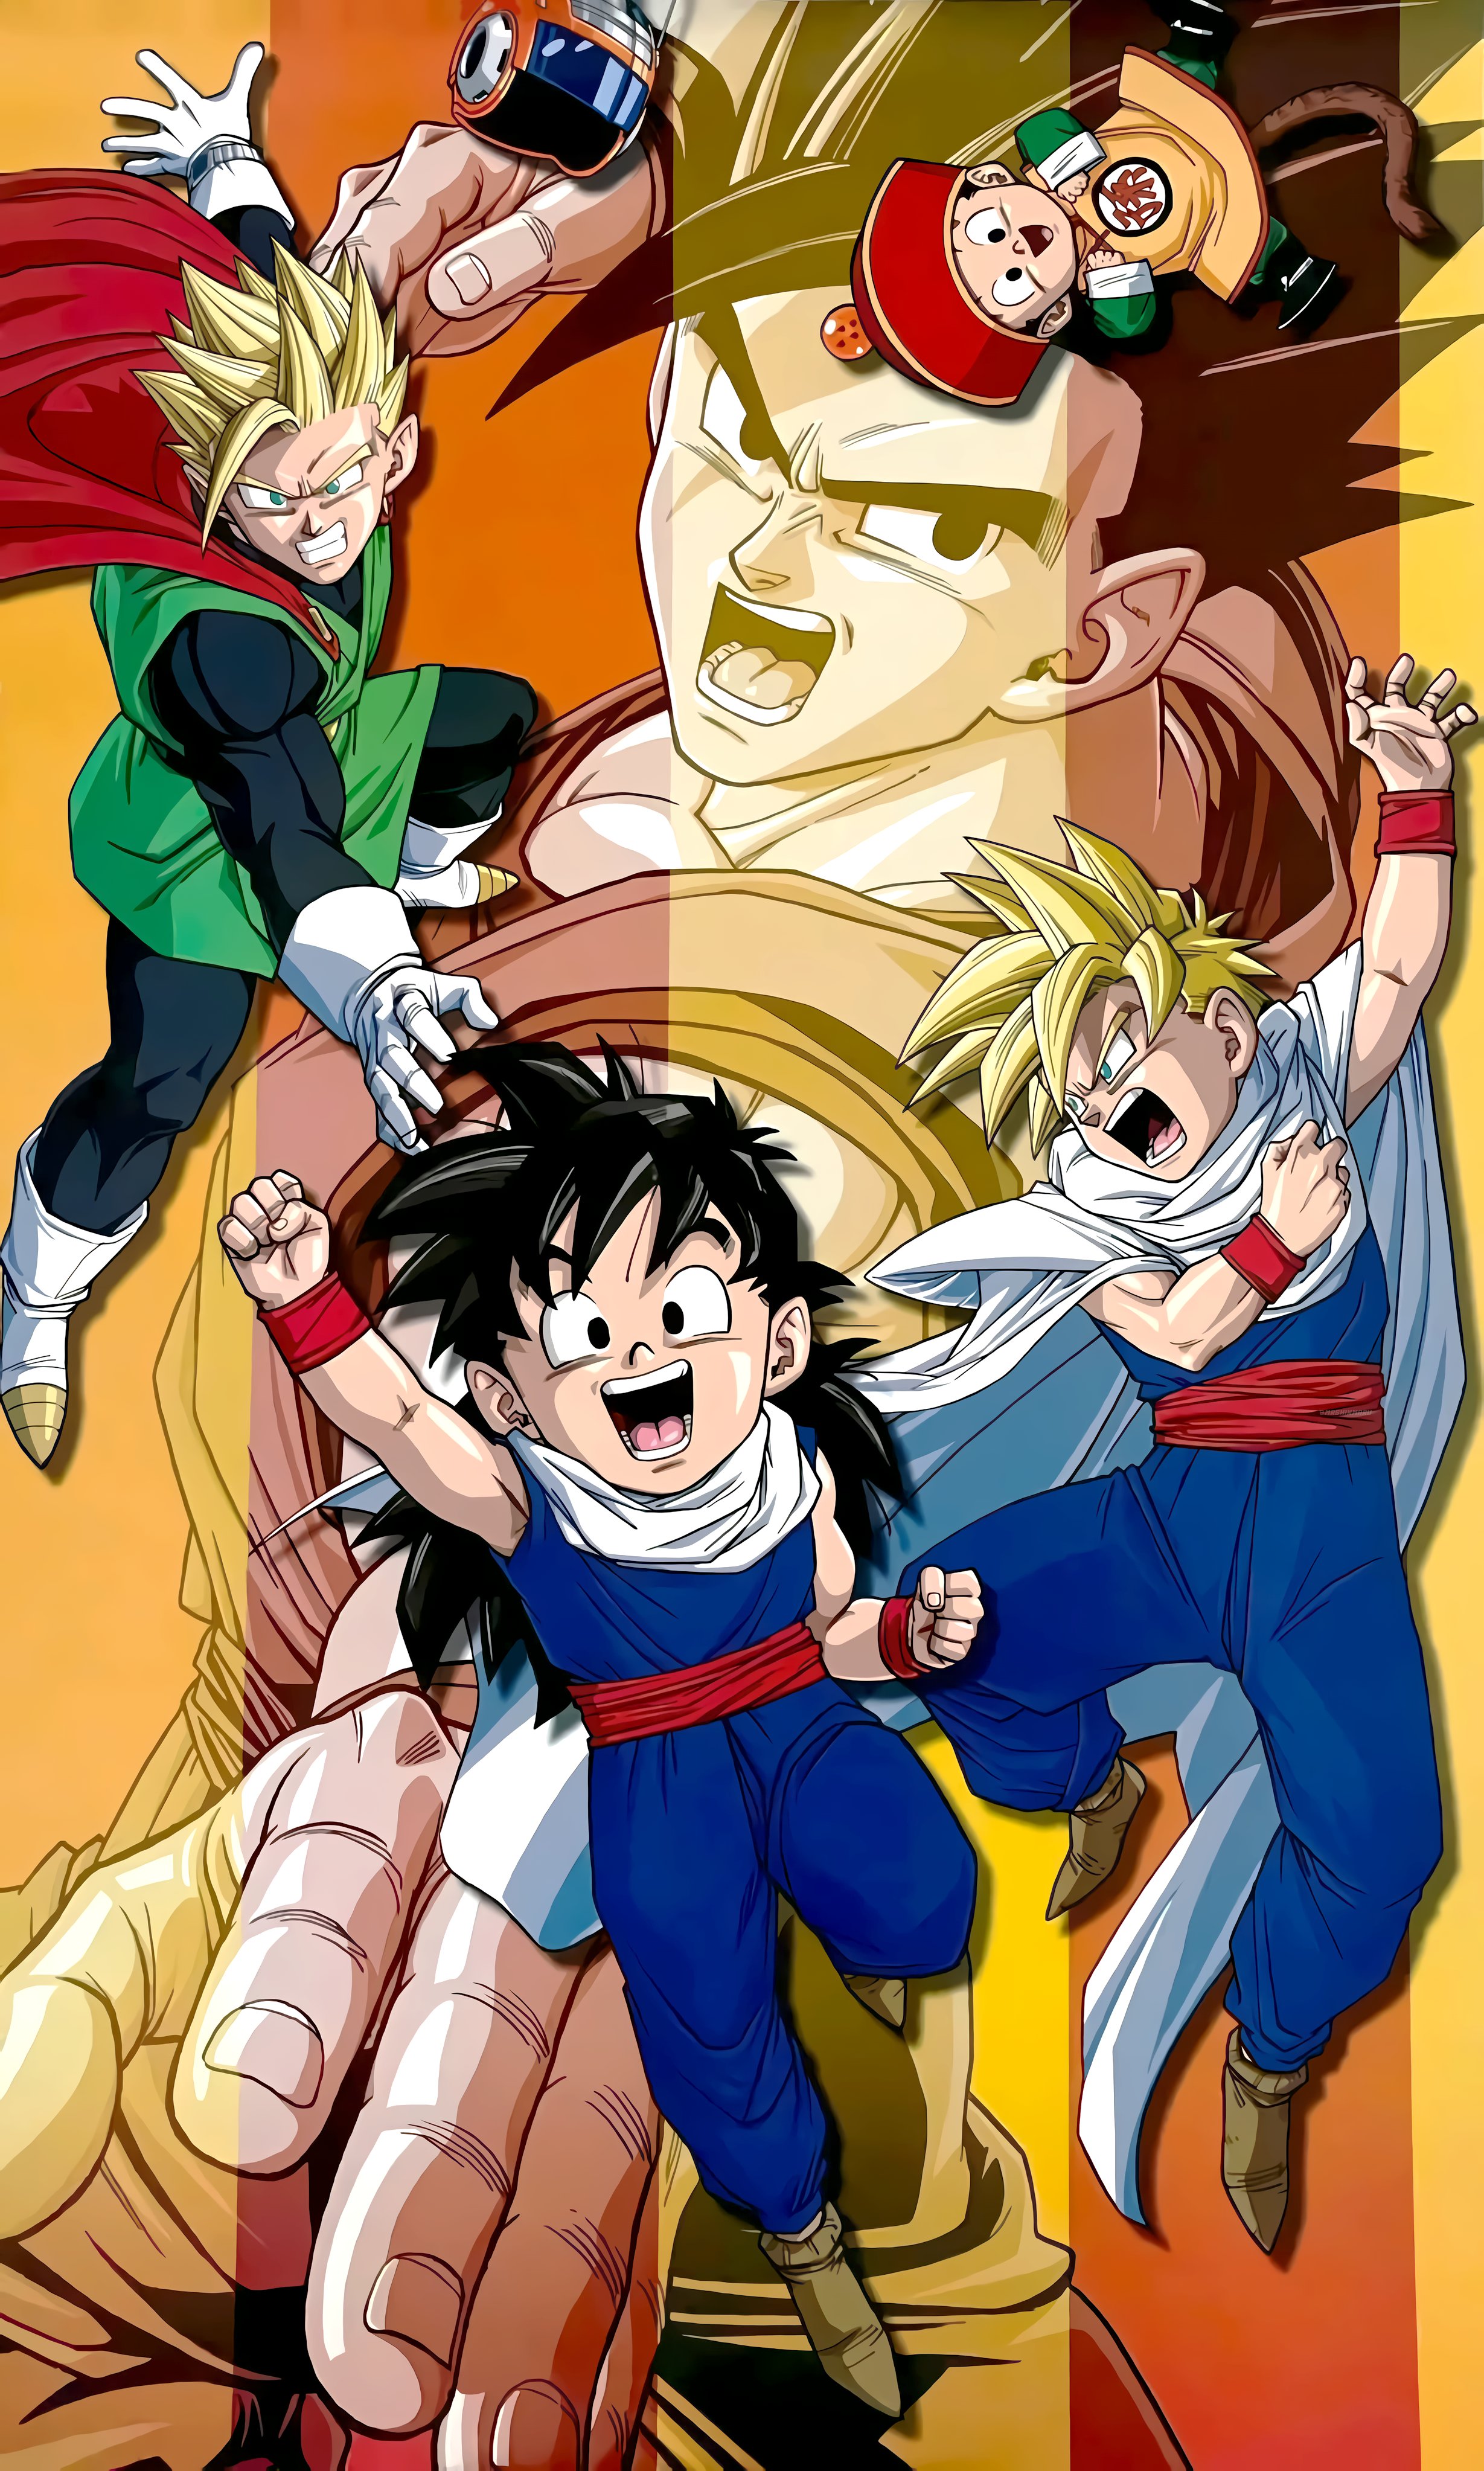 Saiyanbeast on X: Dragon Ball Retro 2004/2005 Artwork Super Saiyan 2 Son- Goku ~ Katsuyoshi Nakatsuru #DragonBallZ #ドラゴンボールZ #DBZ #DragonBallDaima  #Retro #Shueisha #Toeianimation #vintage #2000s #MajinBuuSaga #Toriyama # Goku